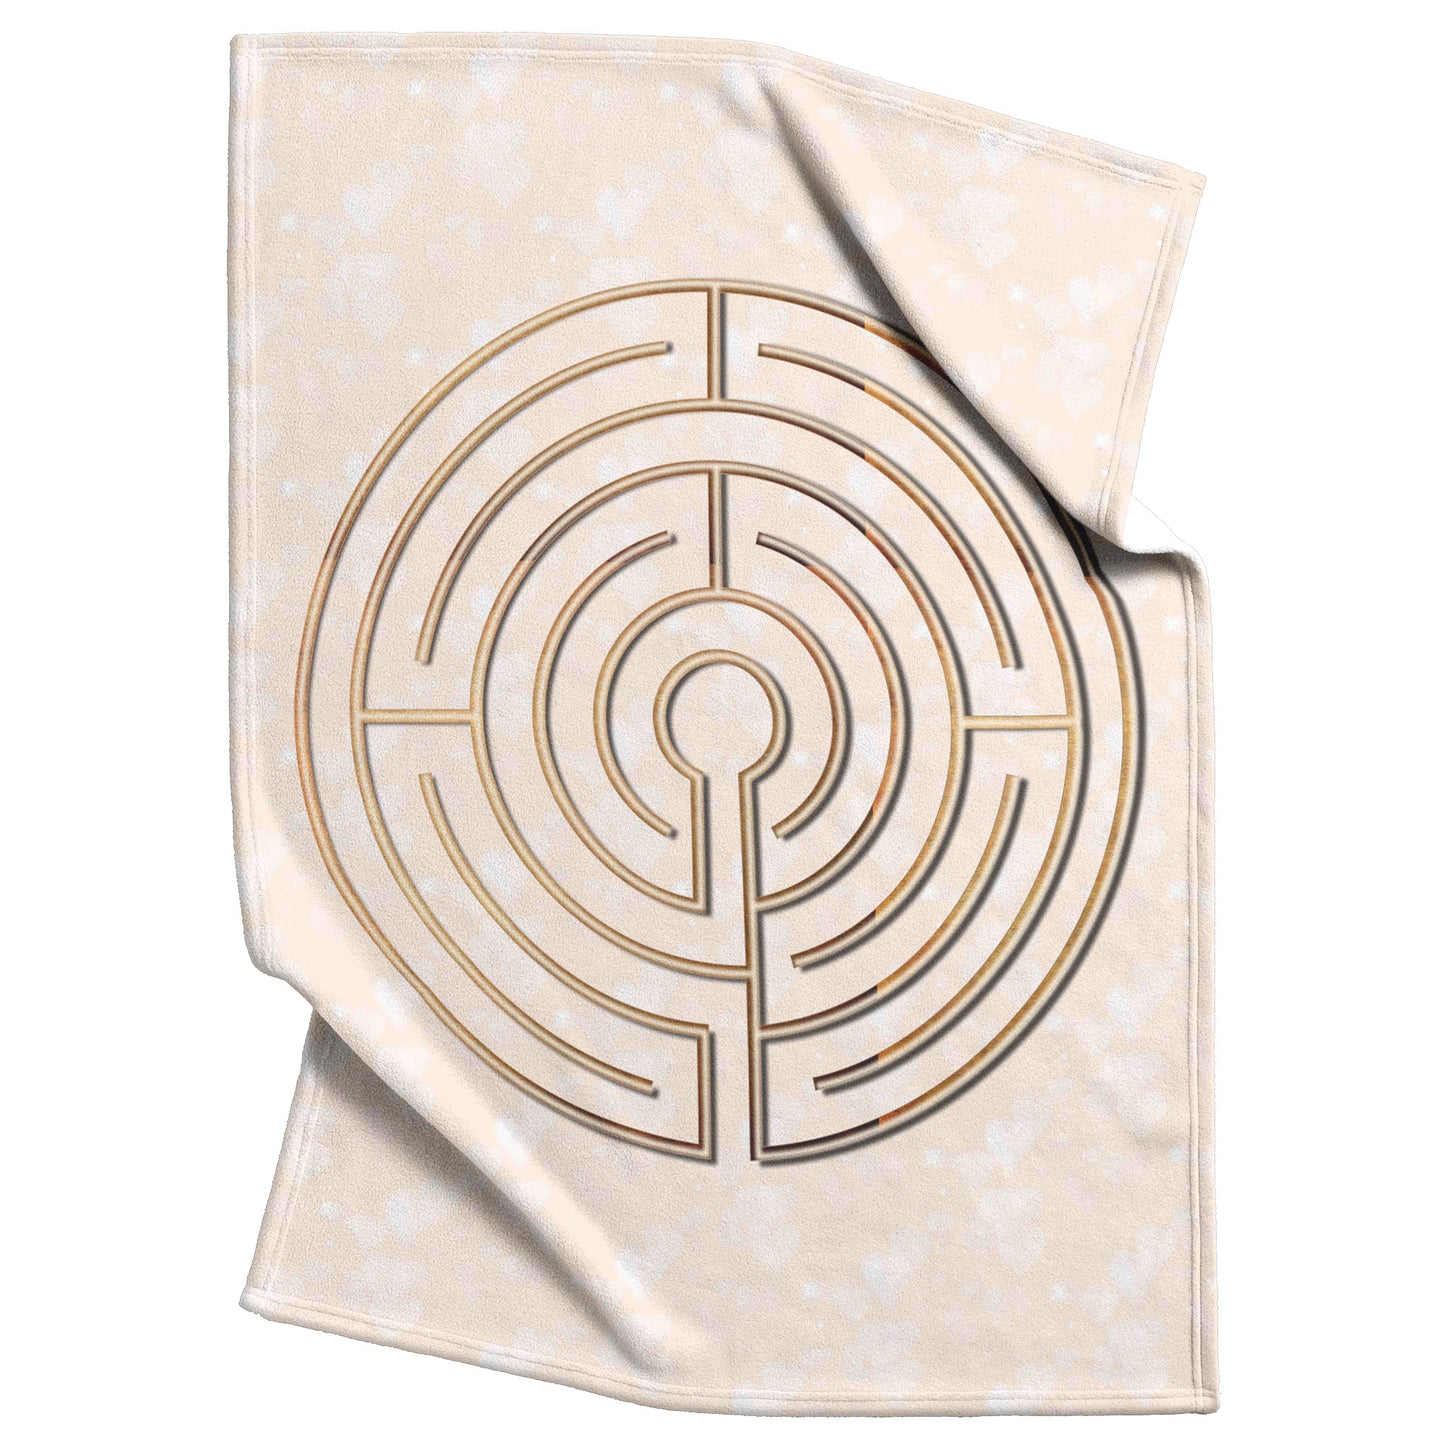 Abingdon Labyrinth Therapy Blanket - Peach